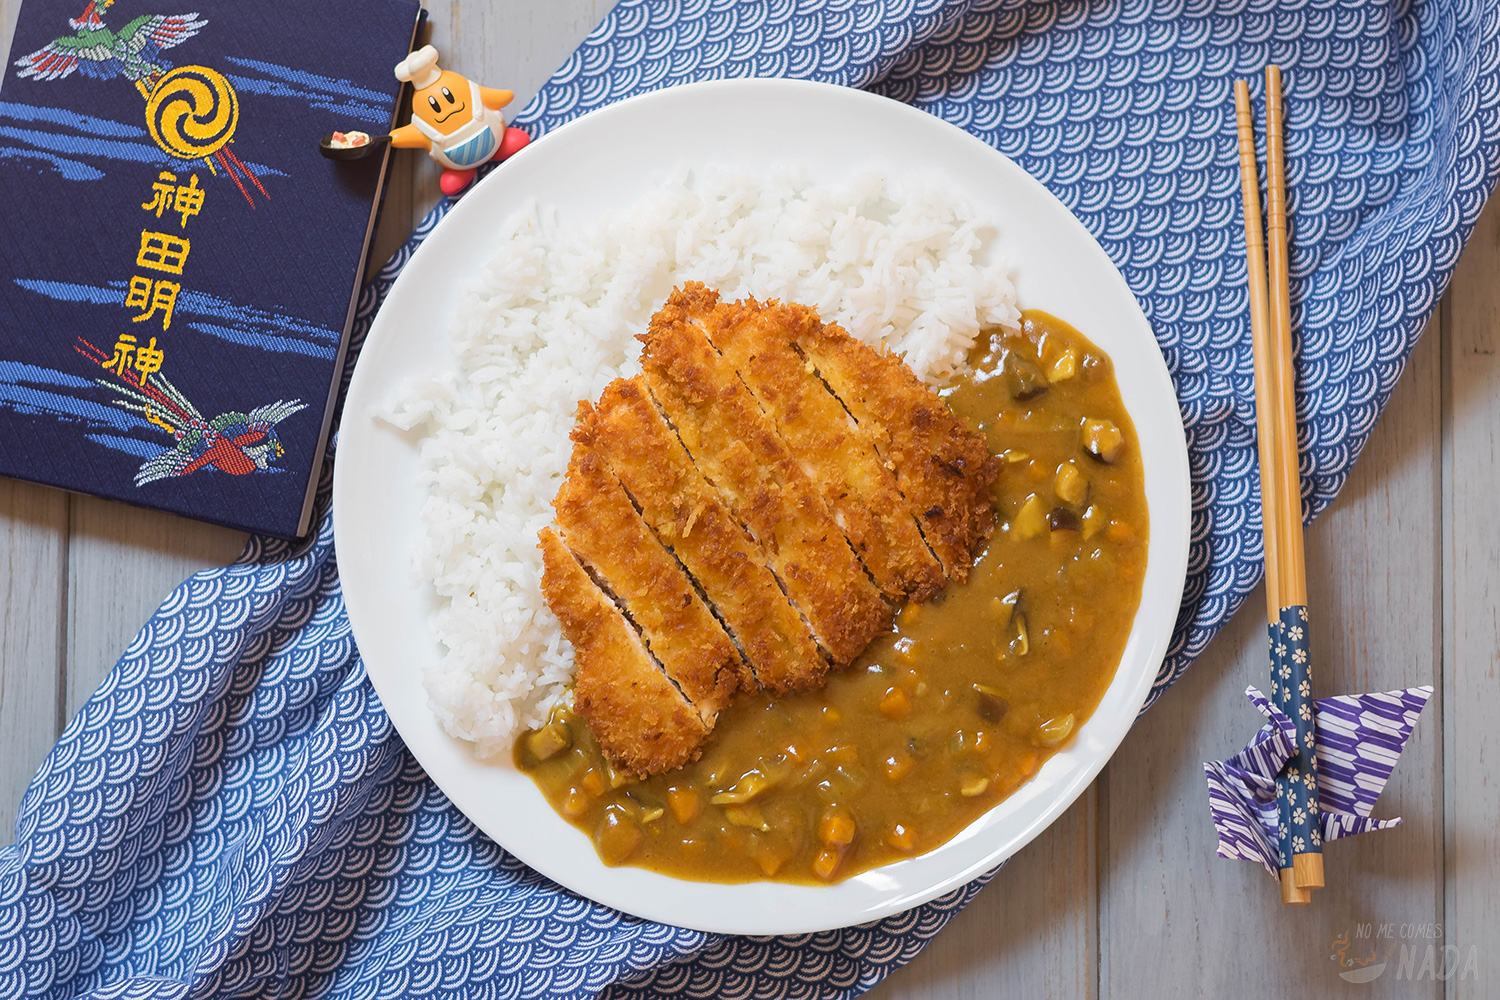 Katsukarē o curry japonés - No me comes nada